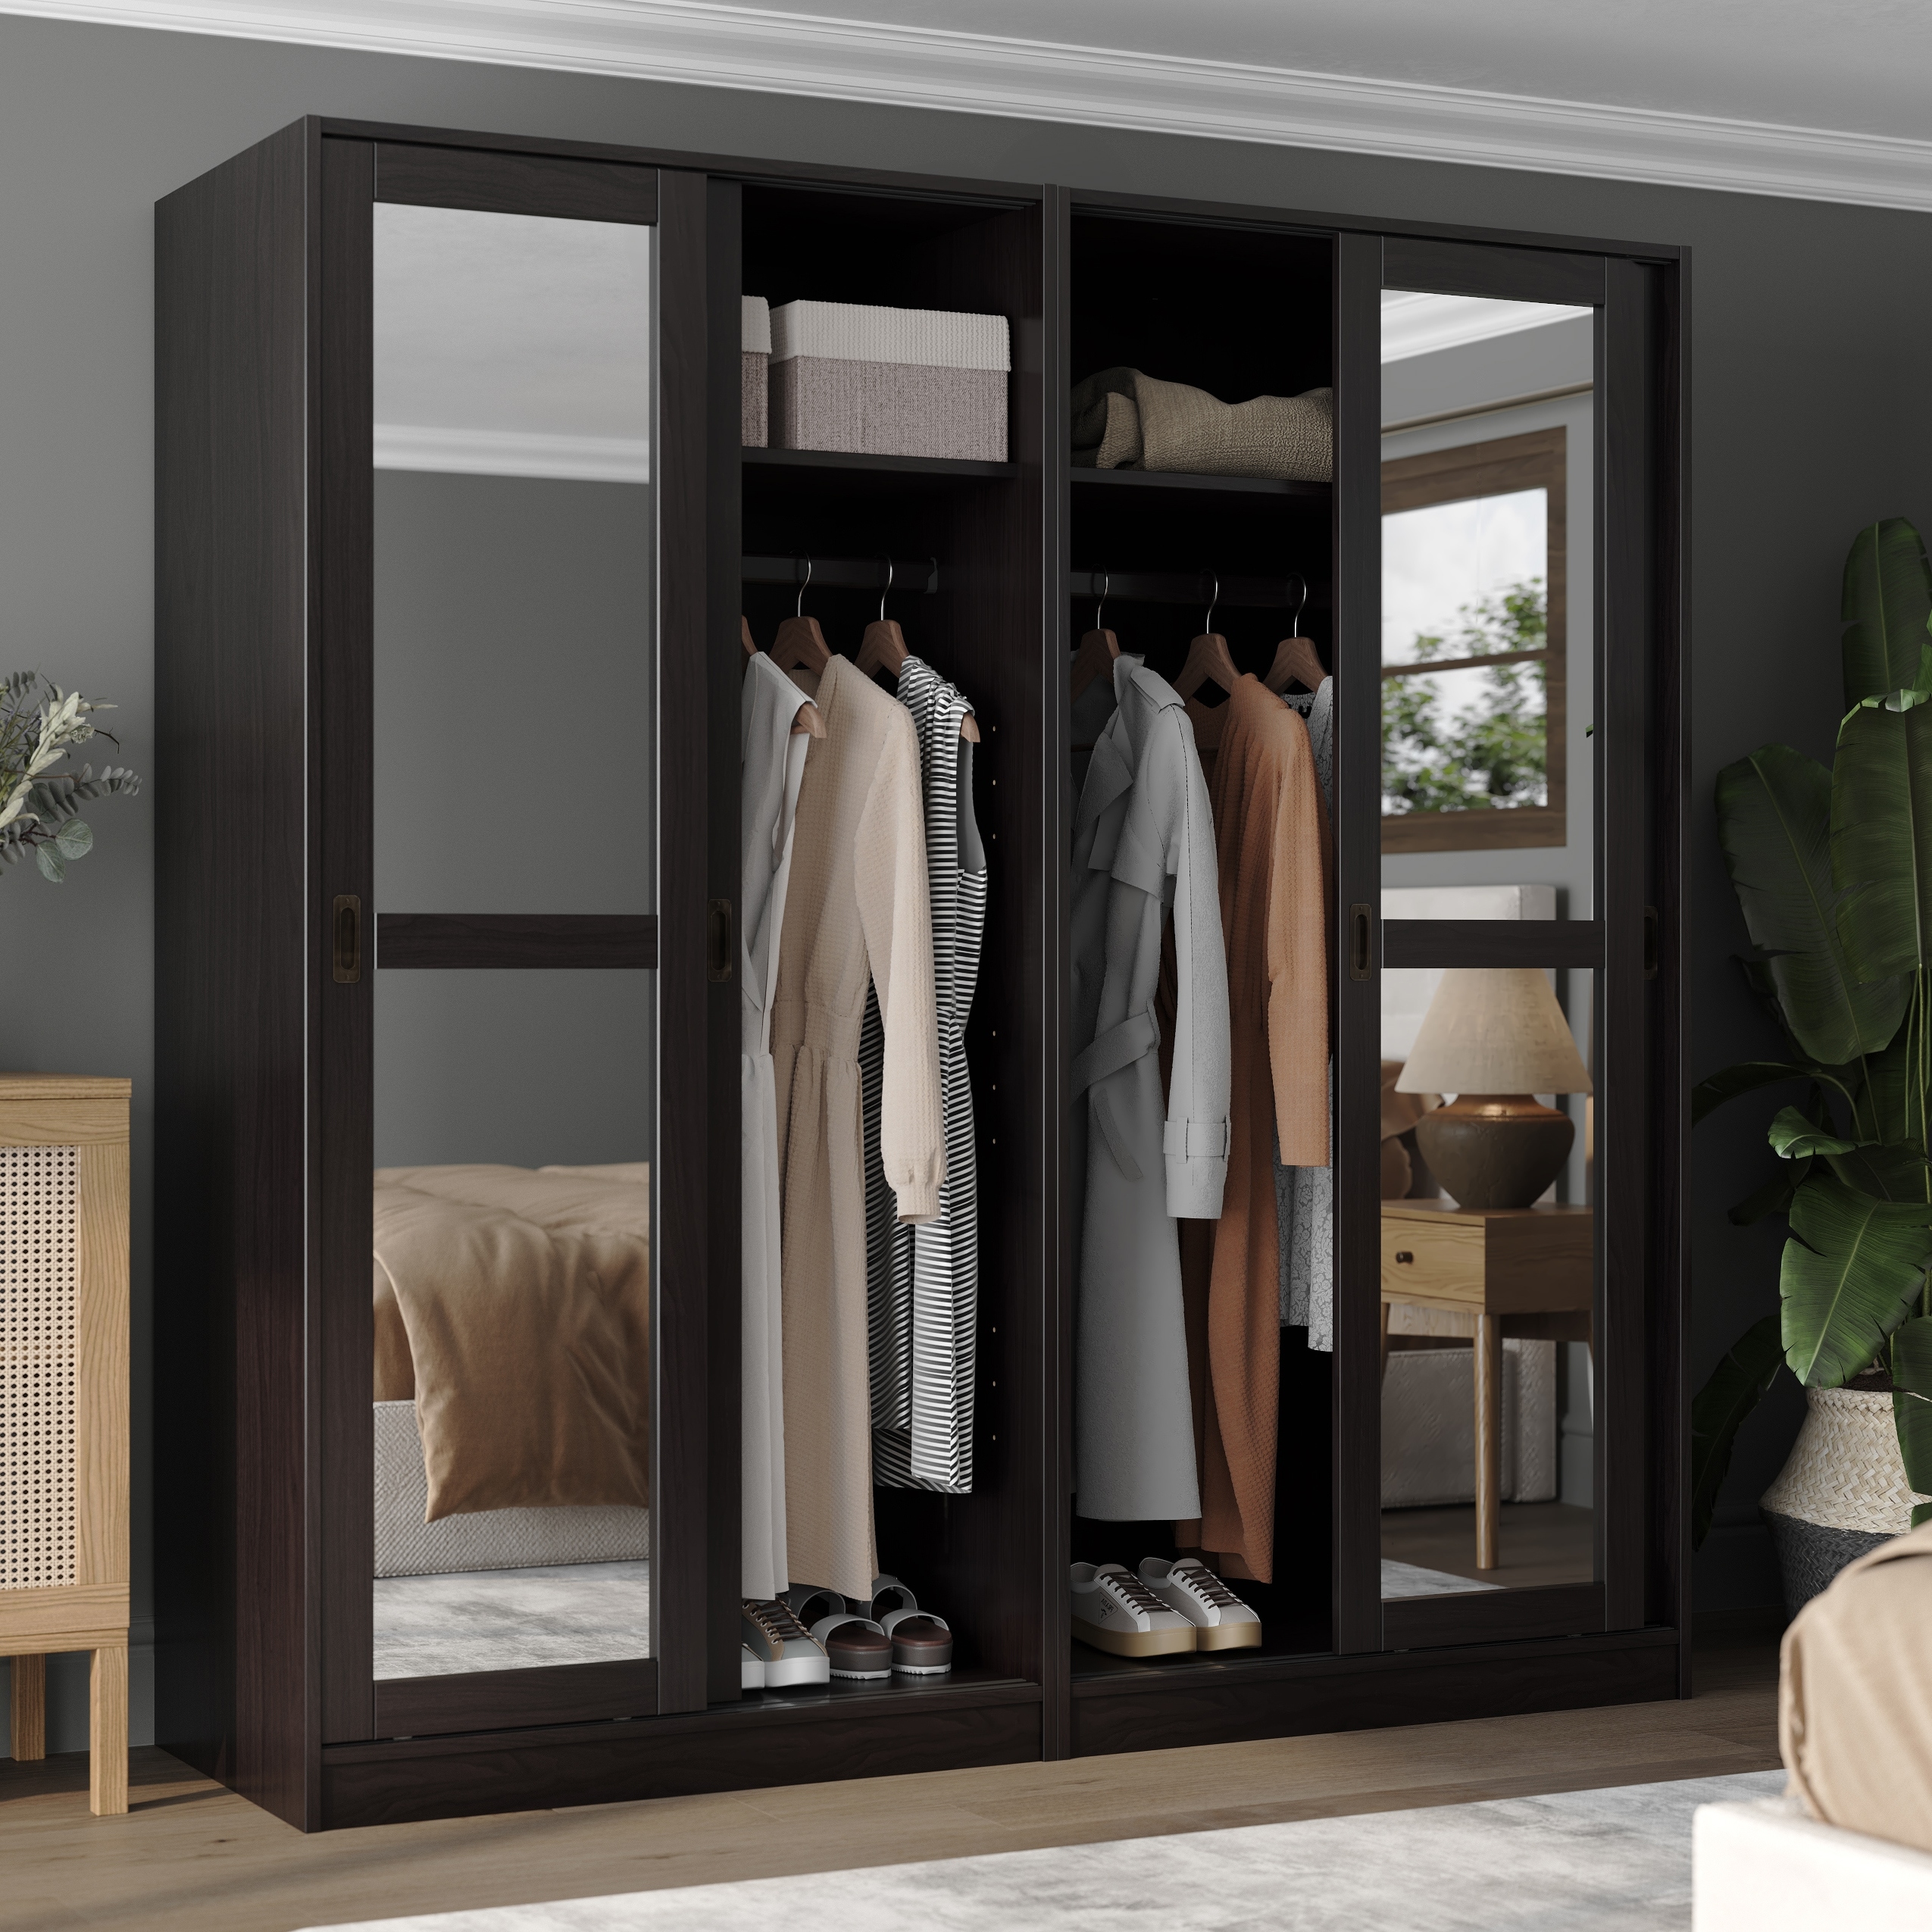  Palace Imports 100% Solid Wood Family Wardrobe Closet